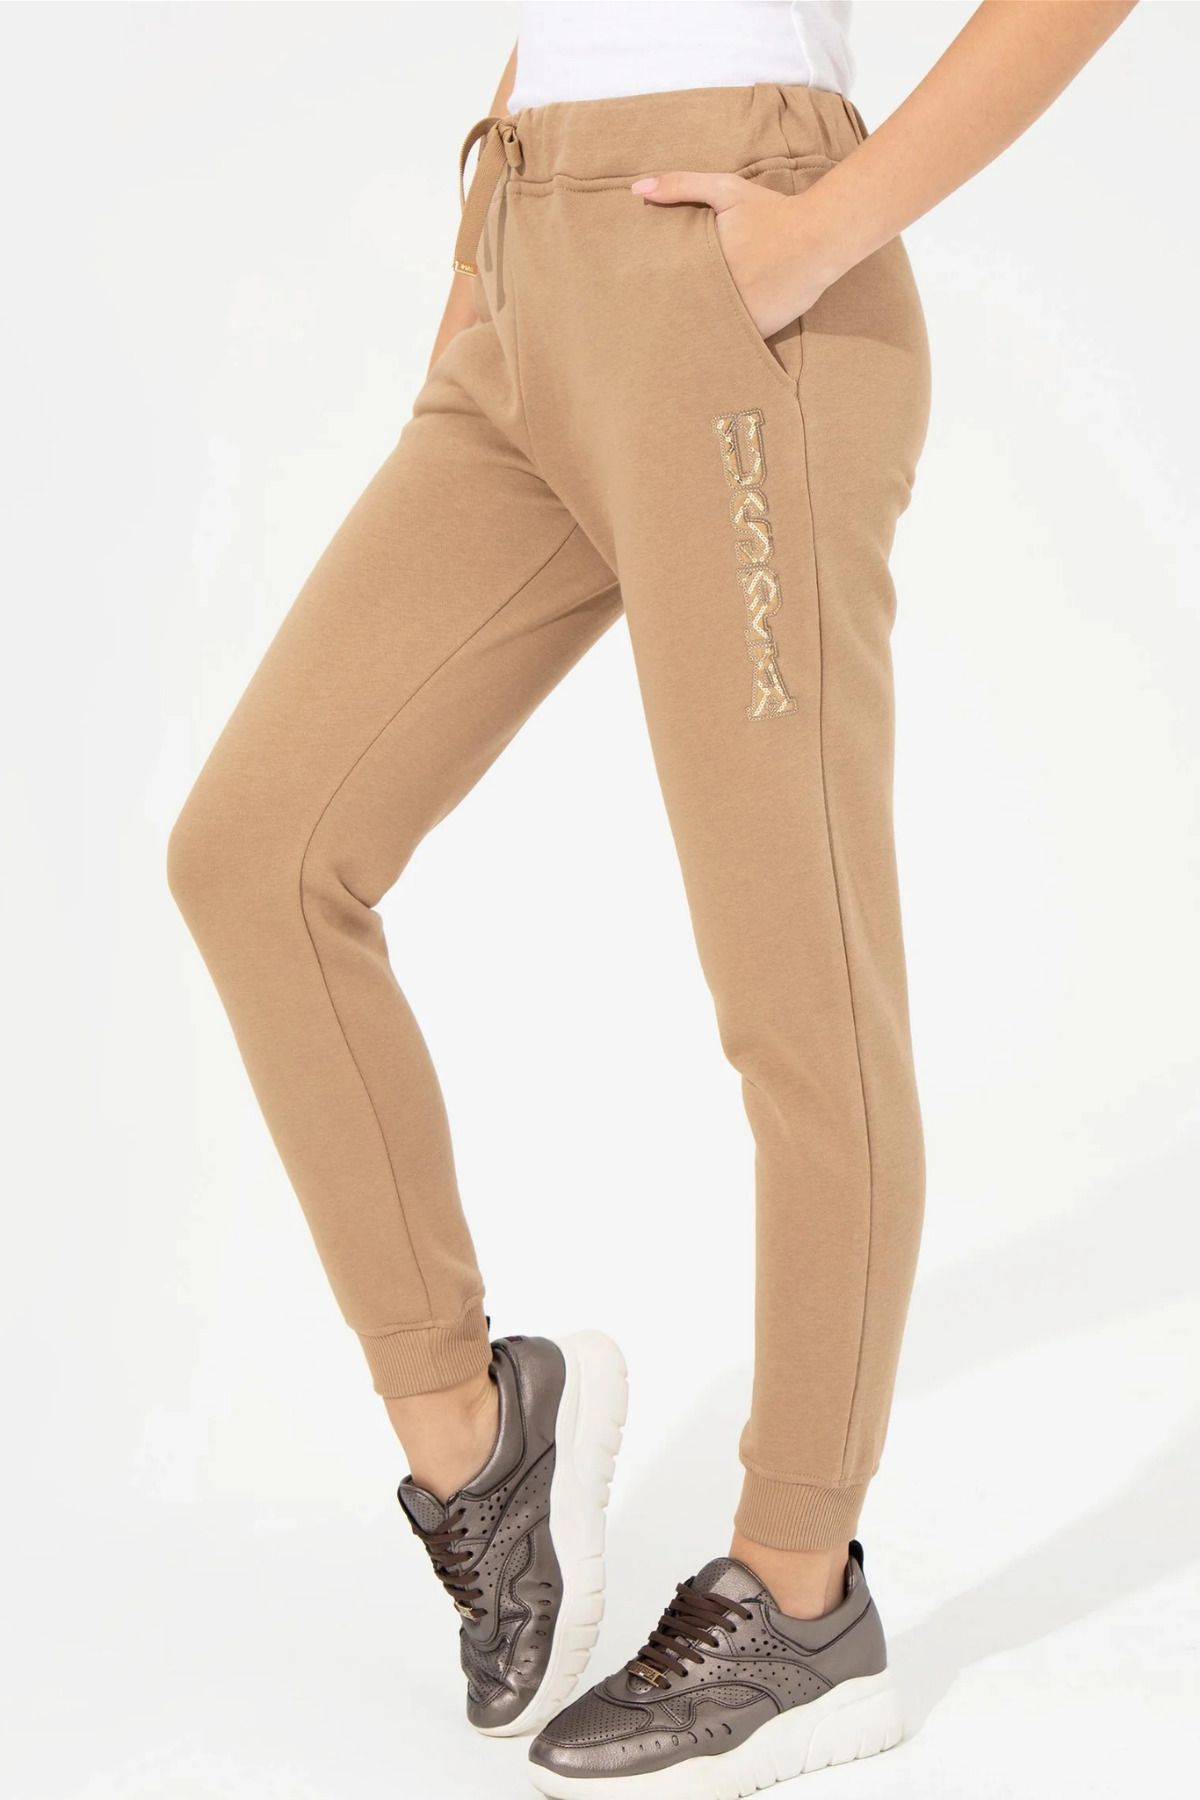 U.S. Polo Assn. Kahverengi Kadın Örme Pantolon